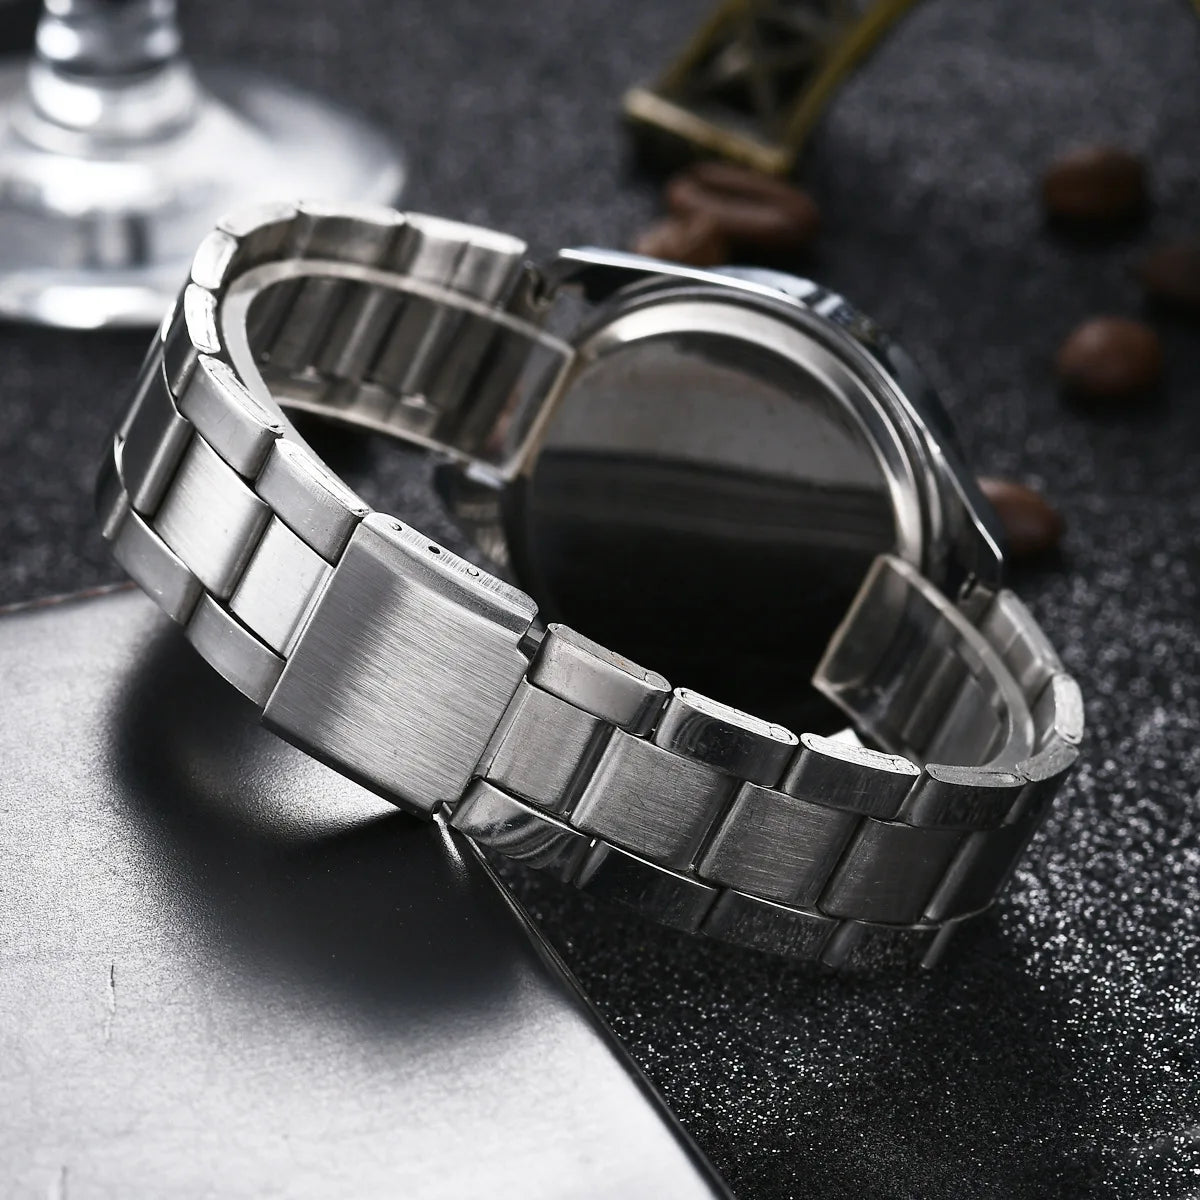 2023 Women Crystal Diamond Watches Luxury Brand Gold WristWatch Stainless Steel Women's Watch Clock Leisure Reloj Mujer TVK